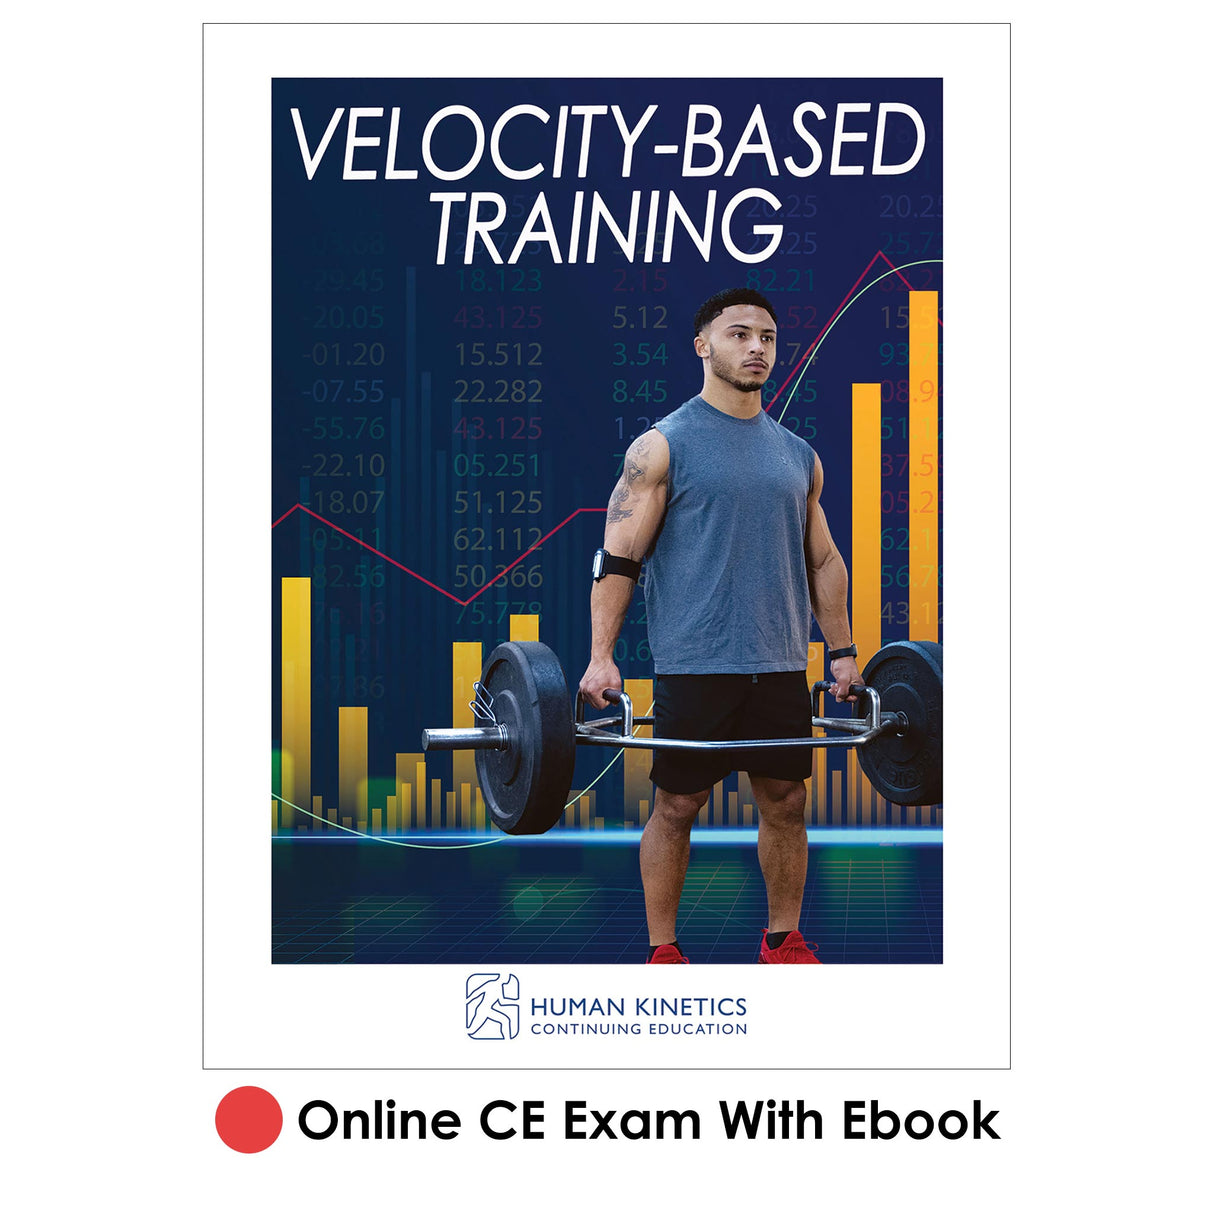 Velocity-Based Training Online CE Exam With Ebook